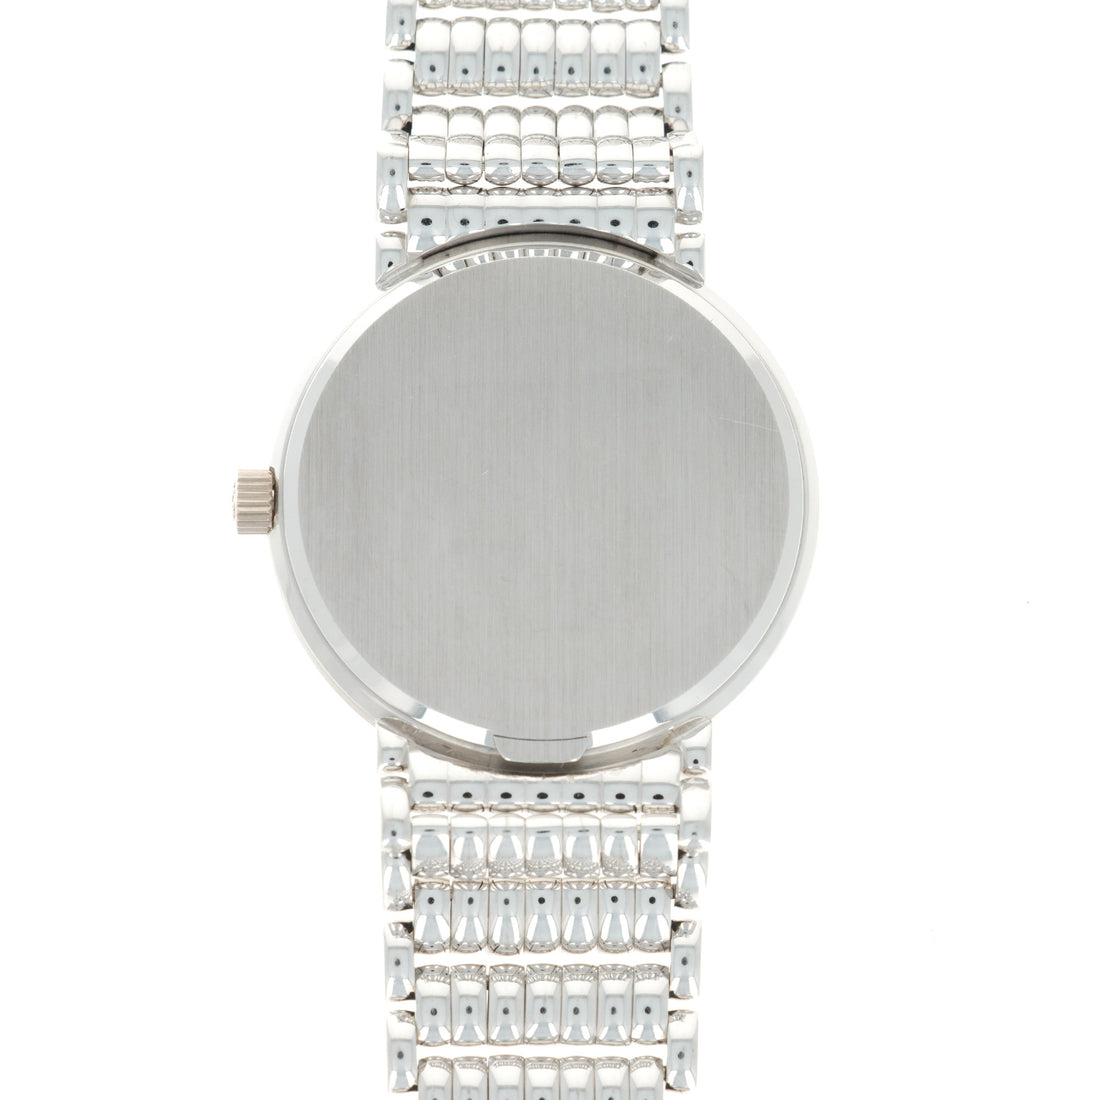 Patek Philippe White Gold Calatrava Watch Ref. 3802 with Unusual Bracelet